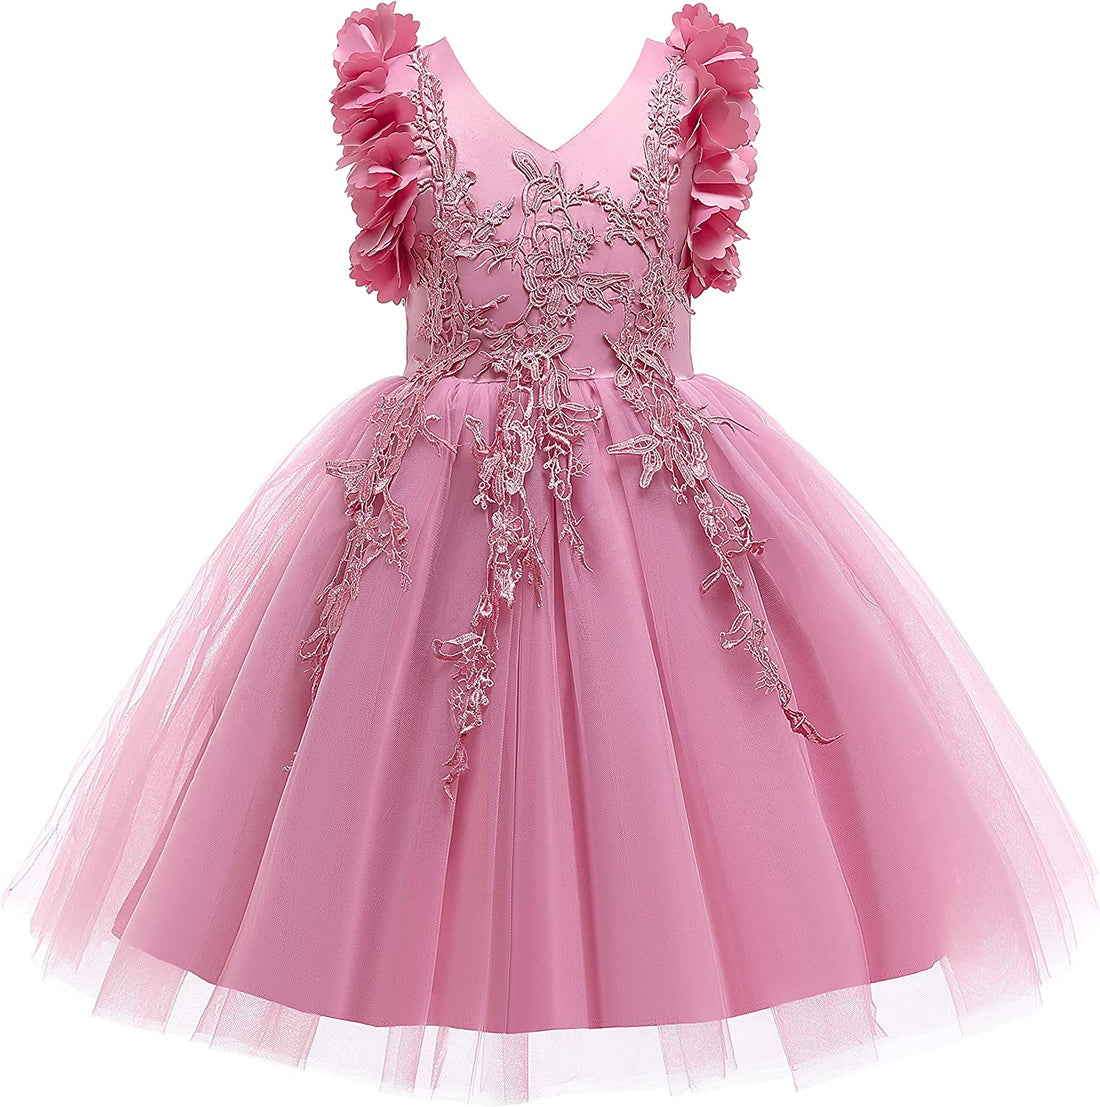 3D Butterfly Cuffs Dusty Pink Lace Tulle A-Line Flower Girl Dress